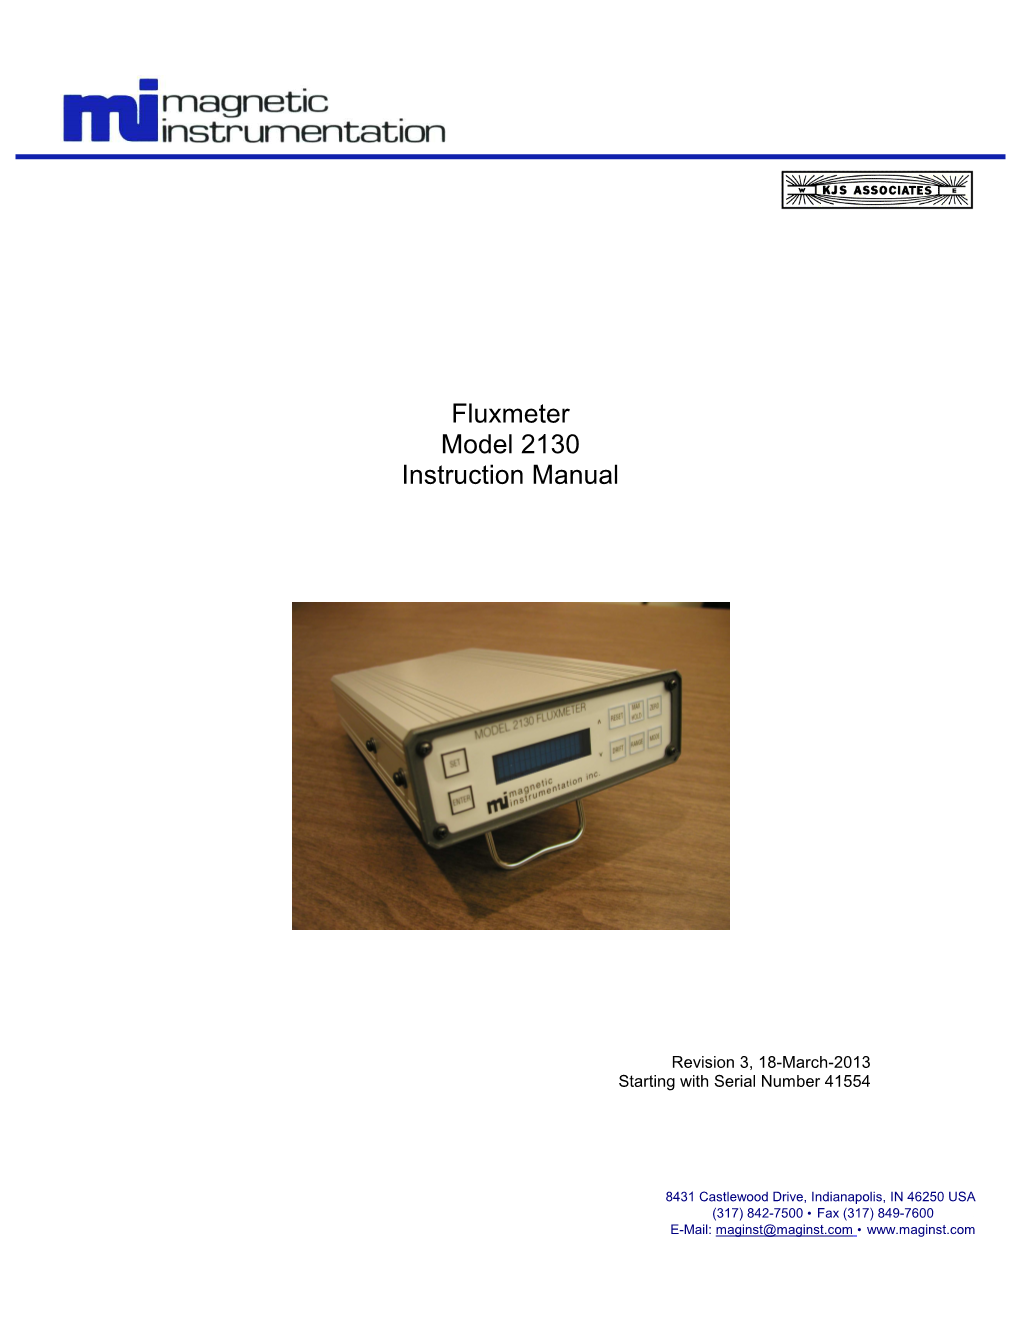 Fluxmeter Model 2130 Instruction Manual